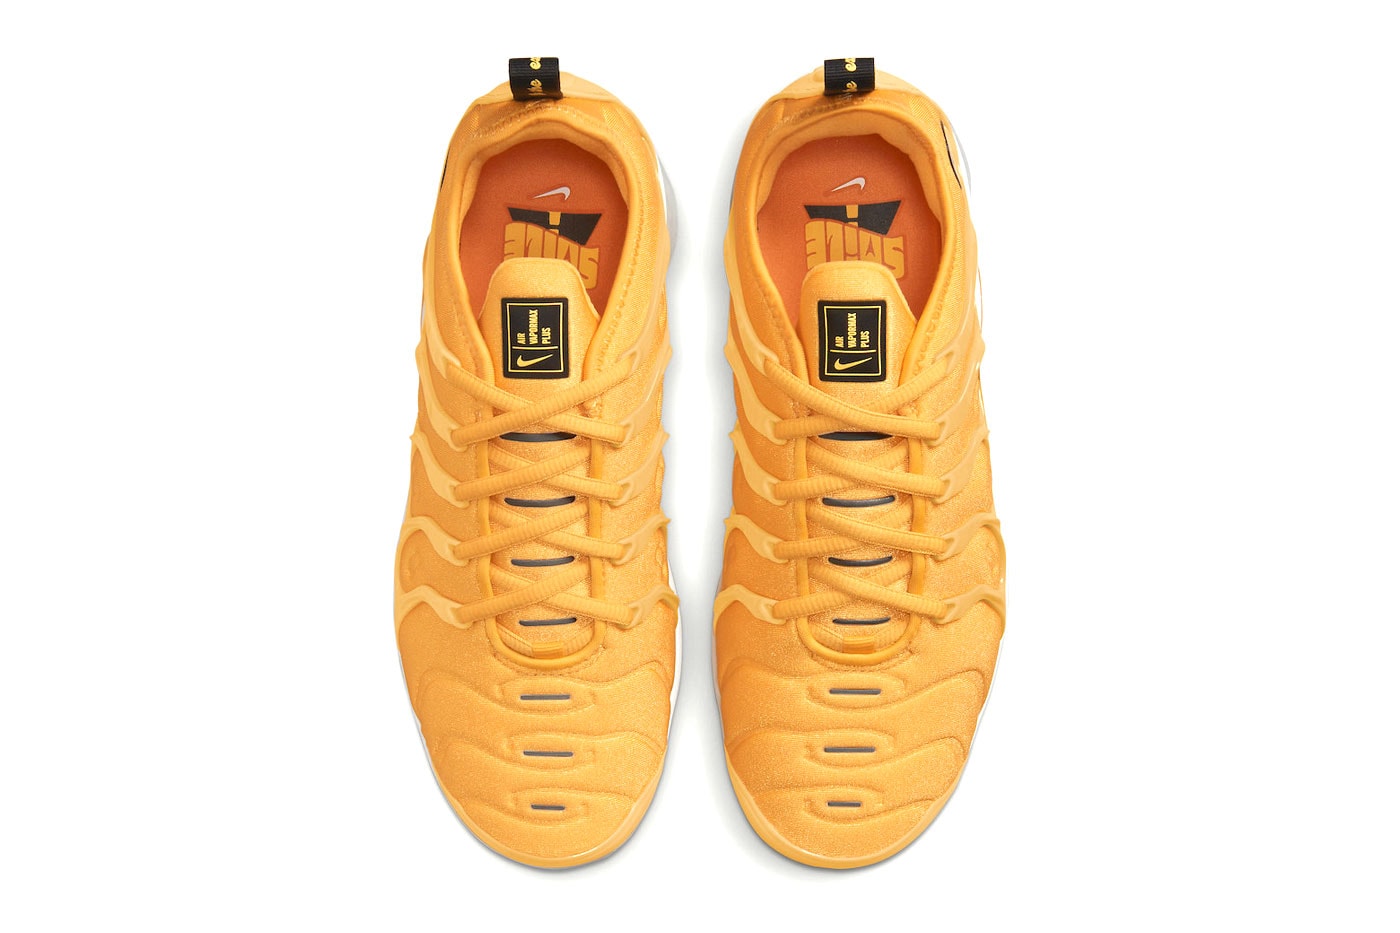 Nike Air VaporMax Plus Go The Extra Smile pollen yellow strike team orange black DO5874 700 womens exclusive november 18 200 USD release date price info